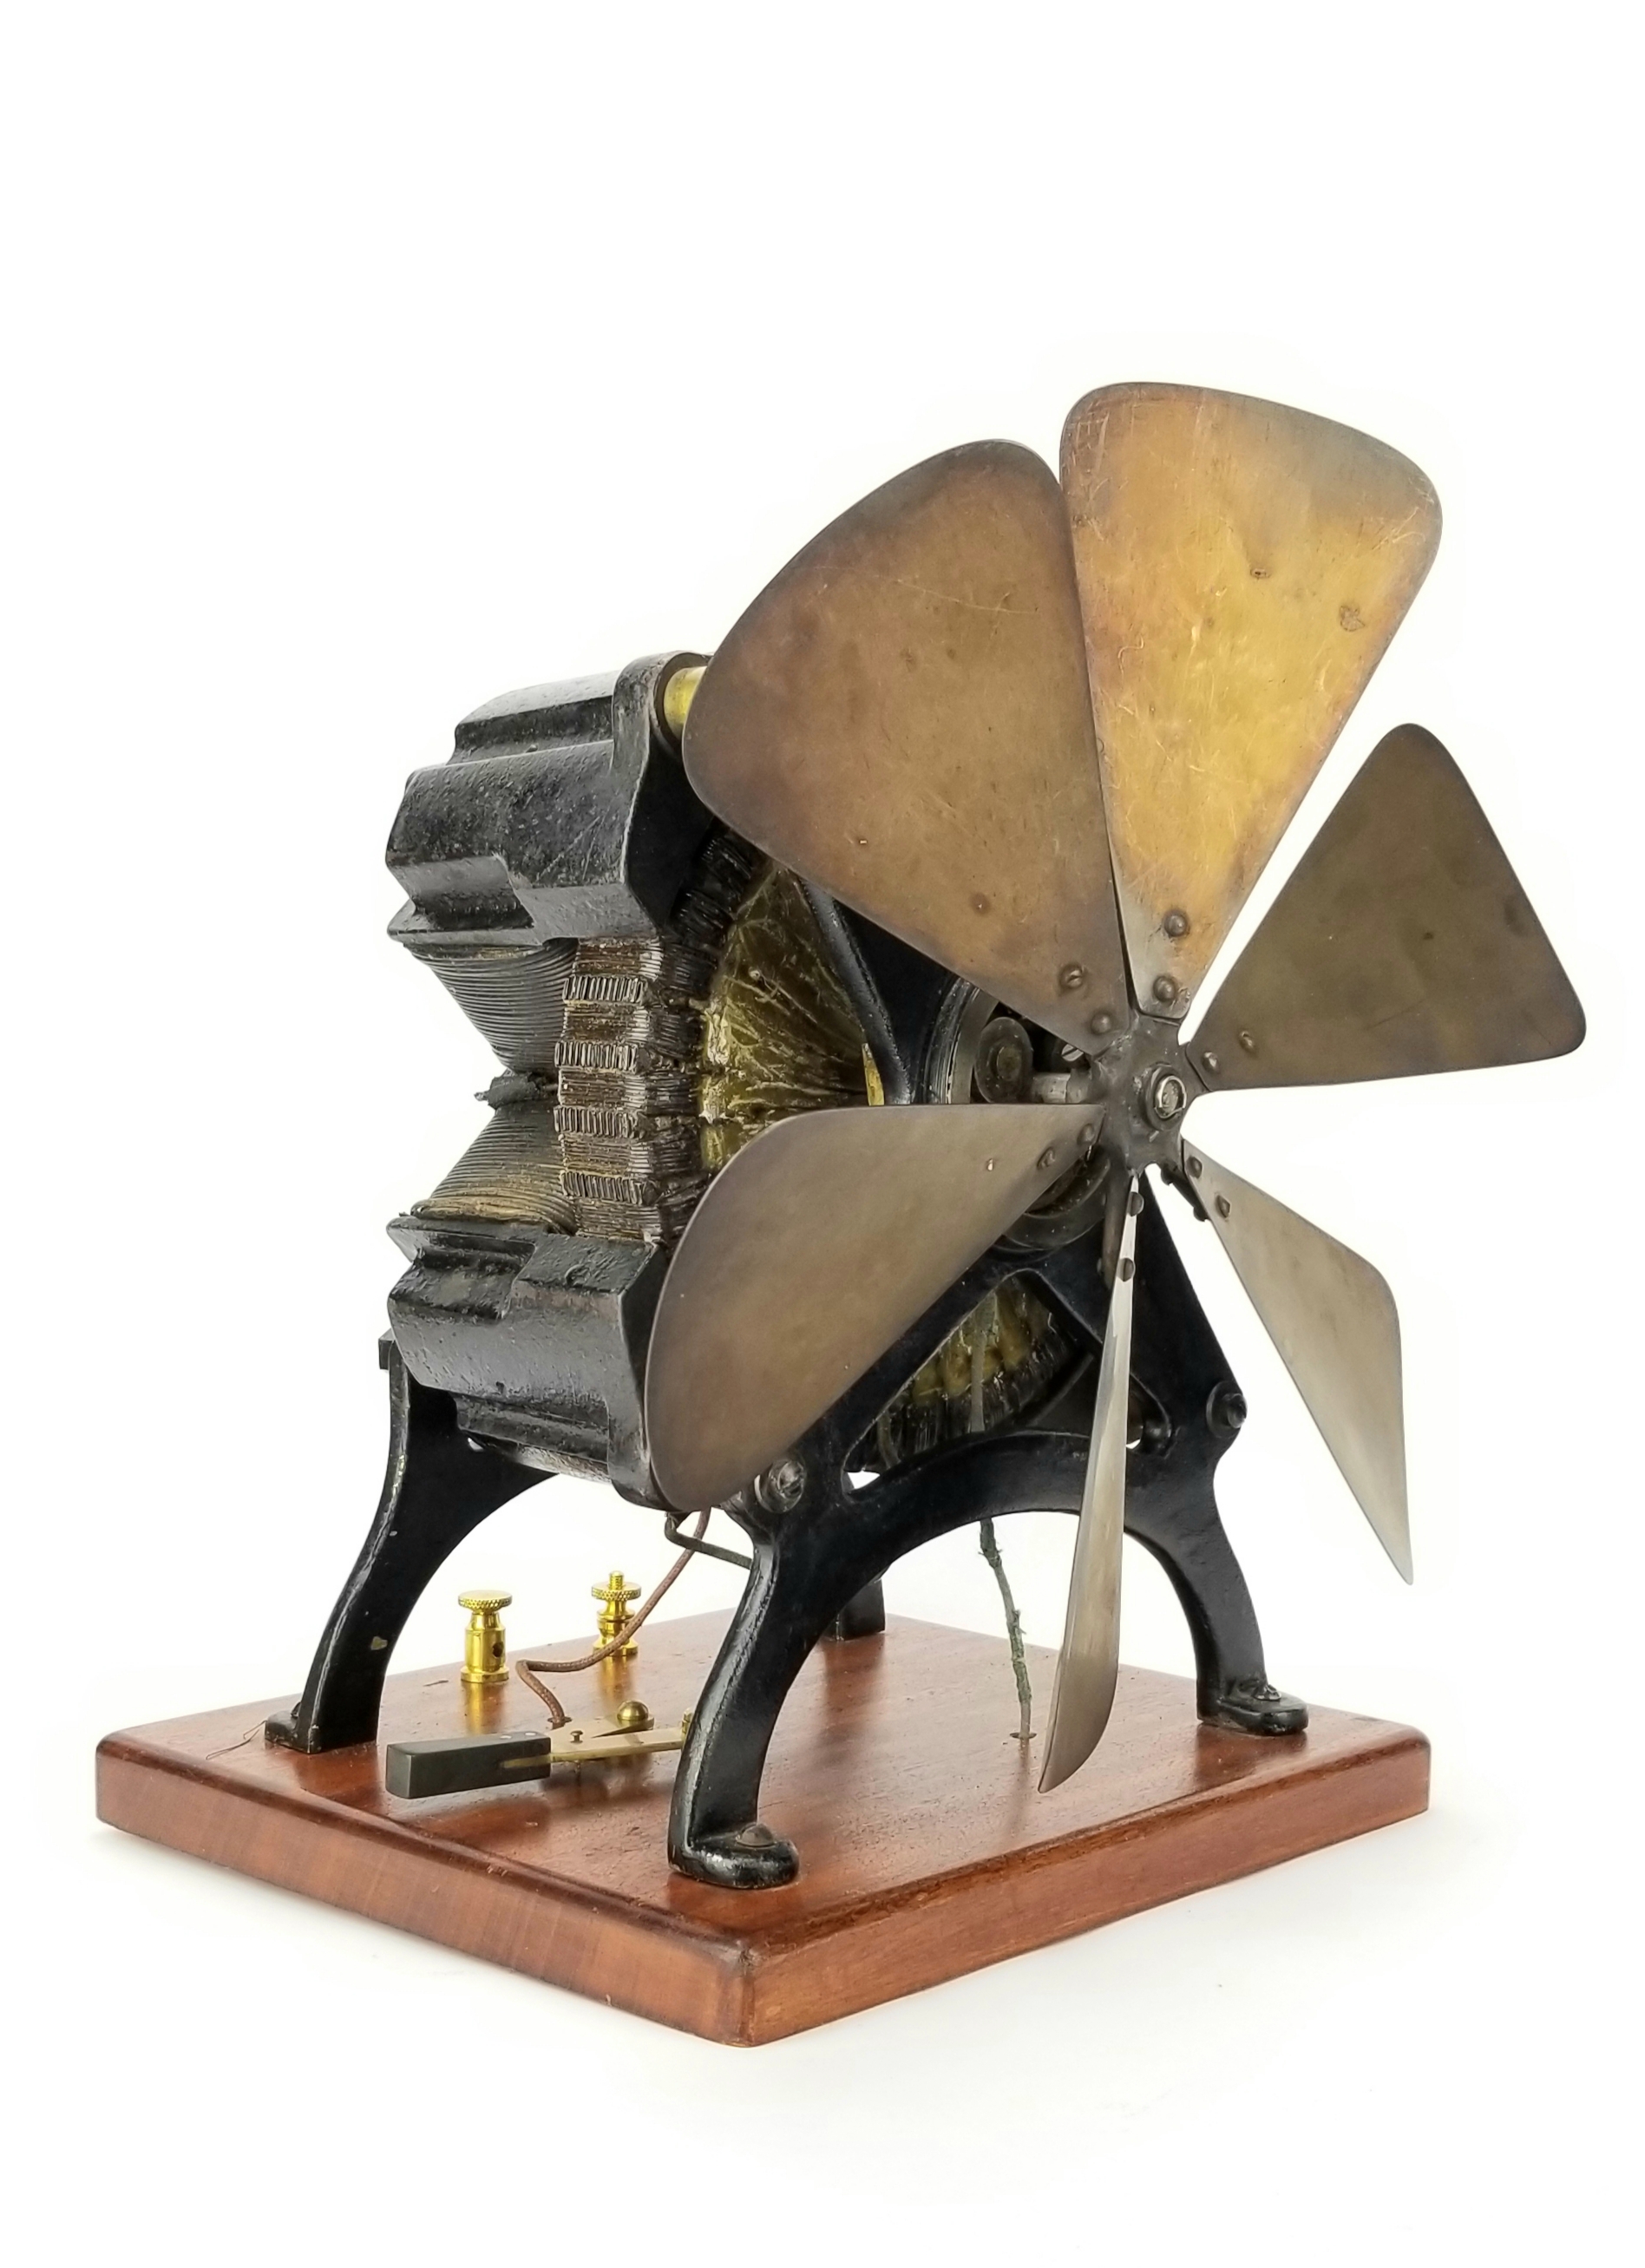 Circa 1888 Edison X Motor Fan